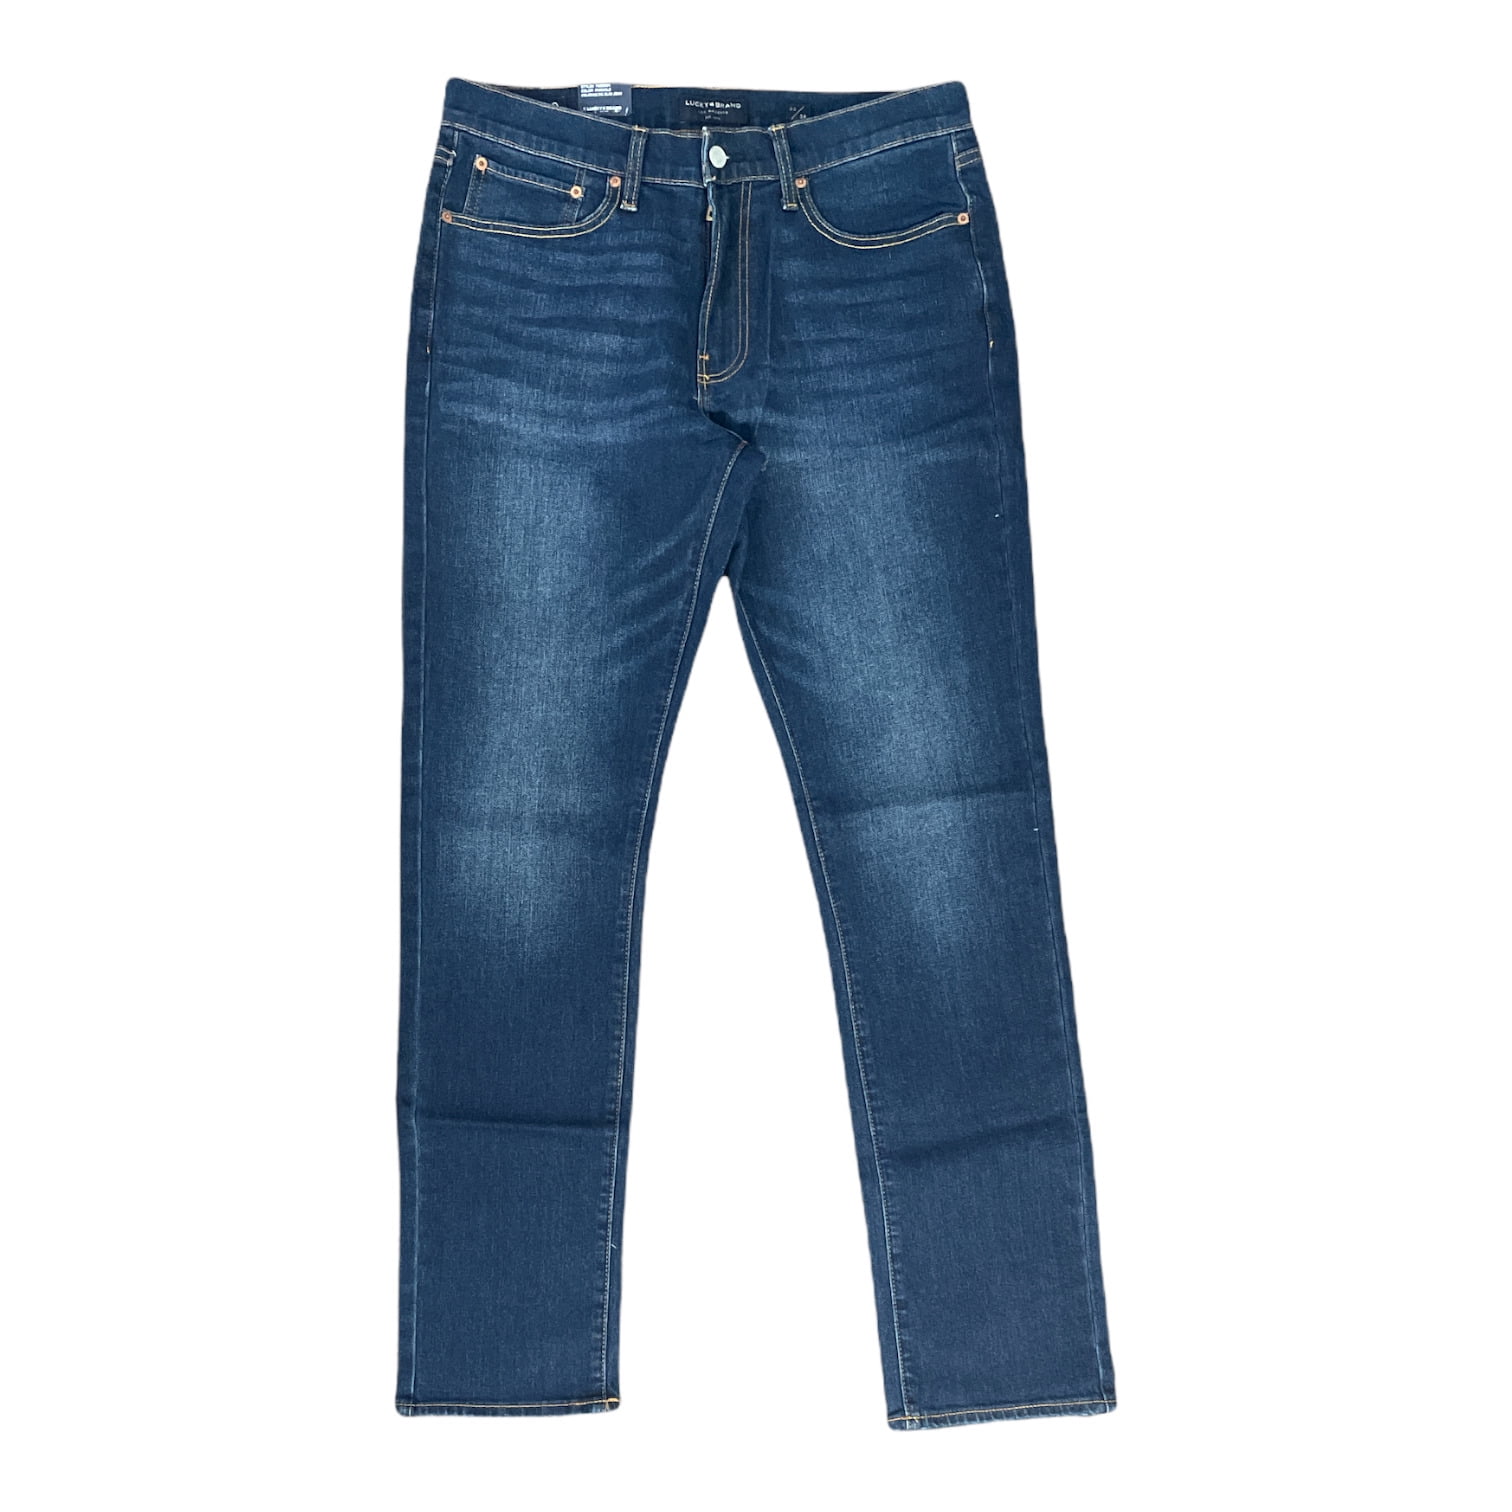 Lucky Brand 410 Athletic Slim Mens Jeans 34x30 Medium Wash Blue